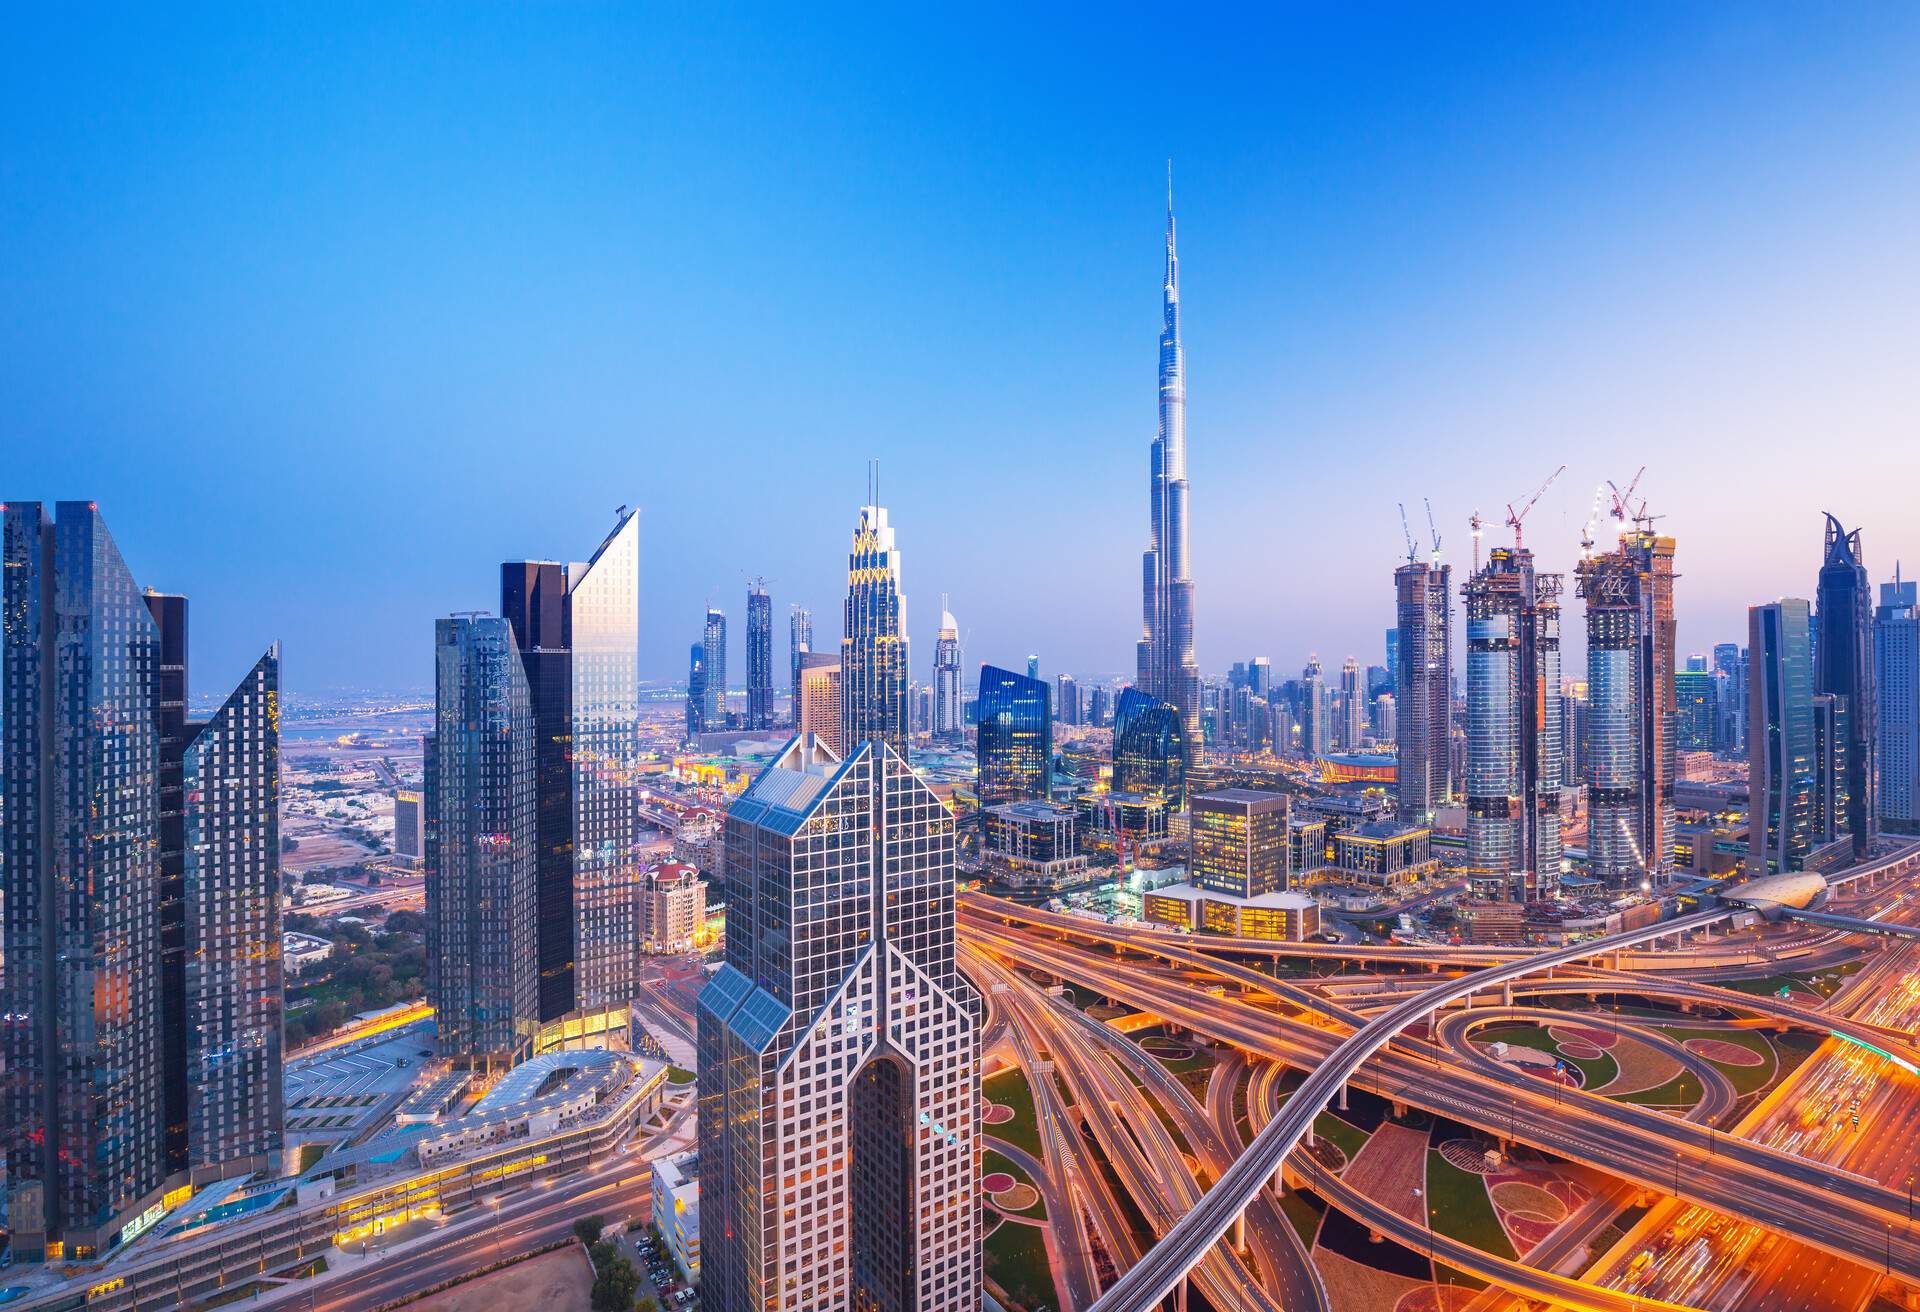 Dubai skyline at sunset with beautiful city center lights and Sheikh Zayed road traffic, Dubai, United Arab Emirates; Shutterstock ID 646922527